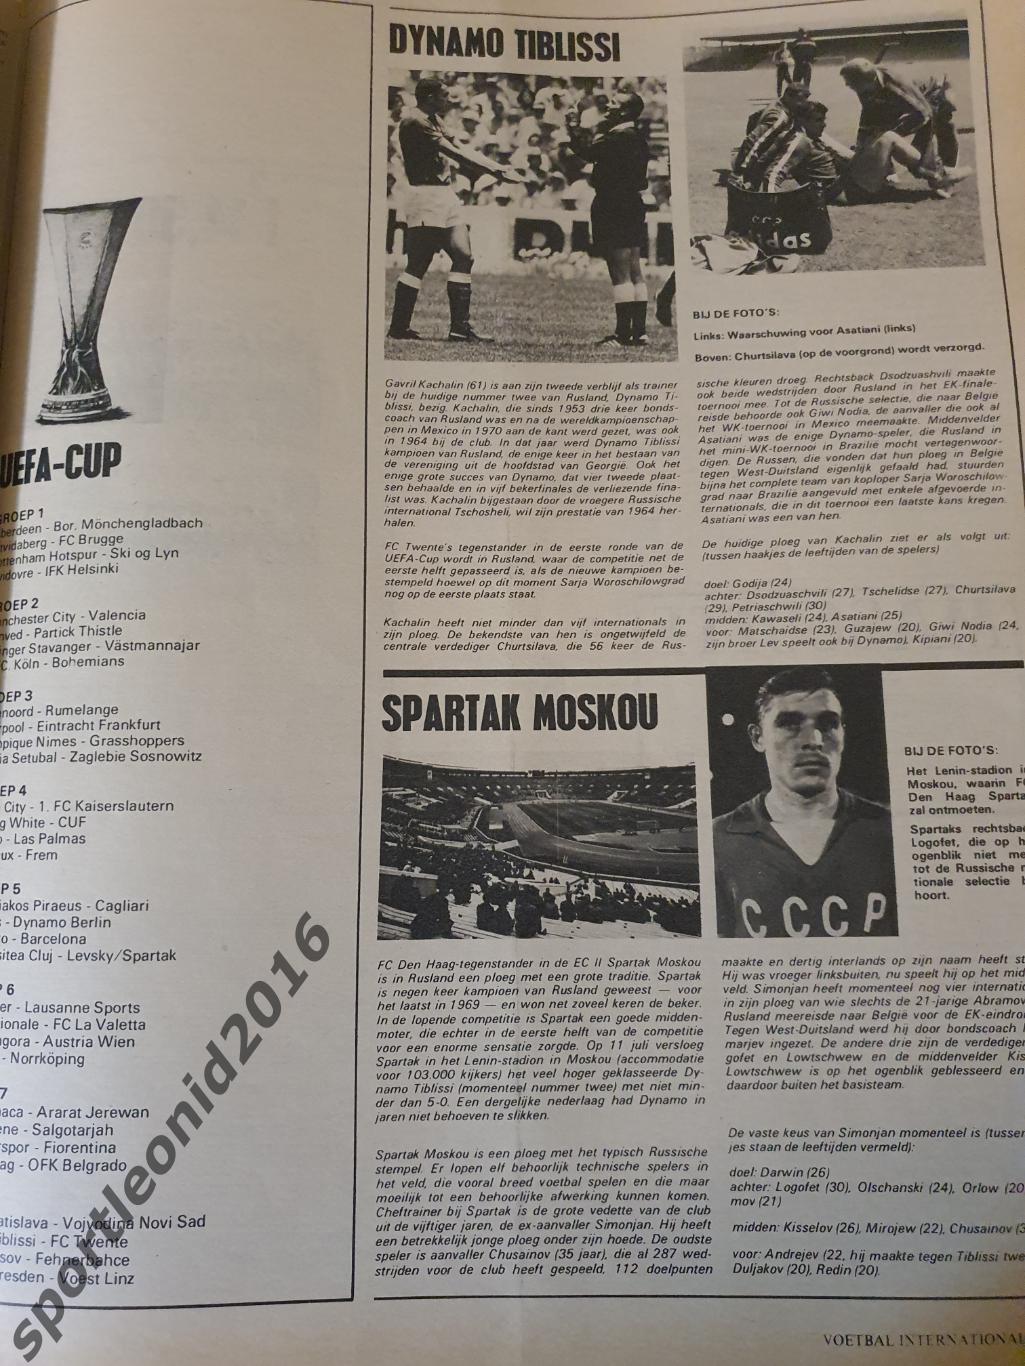 Voetbal International 1972.20 топ выпусков .2 5